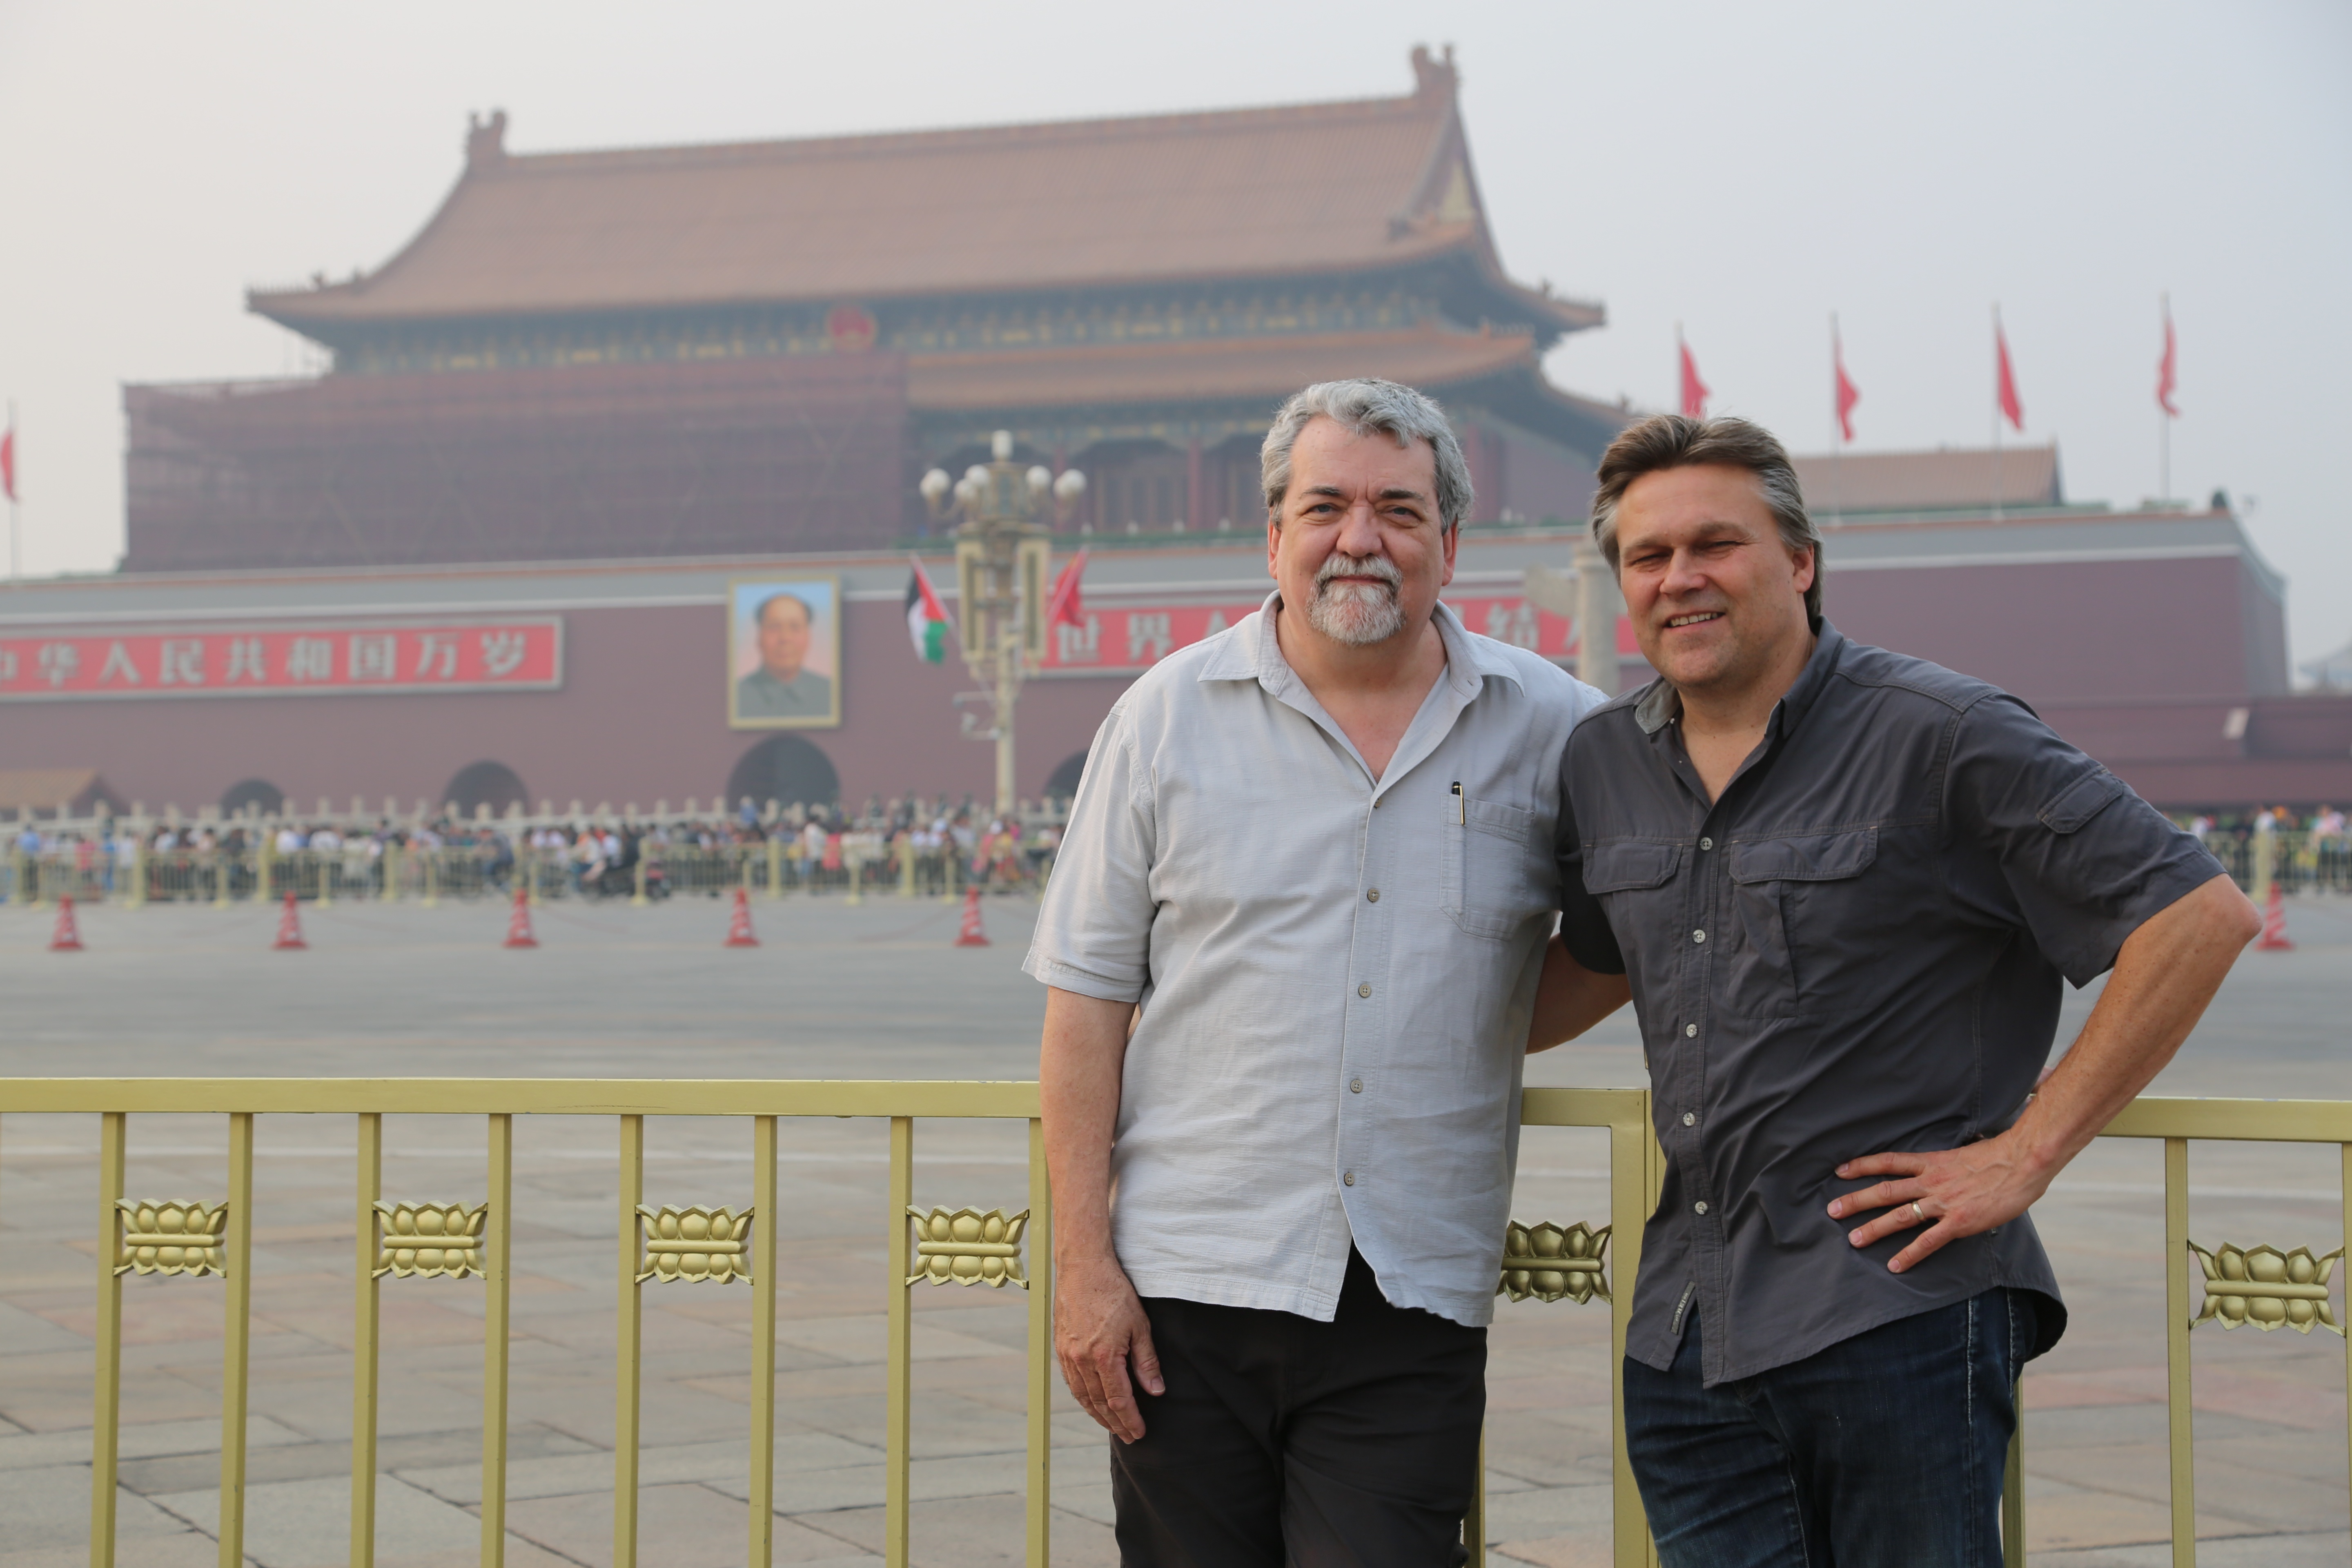 Daniel Flannery & Associate Roland Feuer in Beijing China